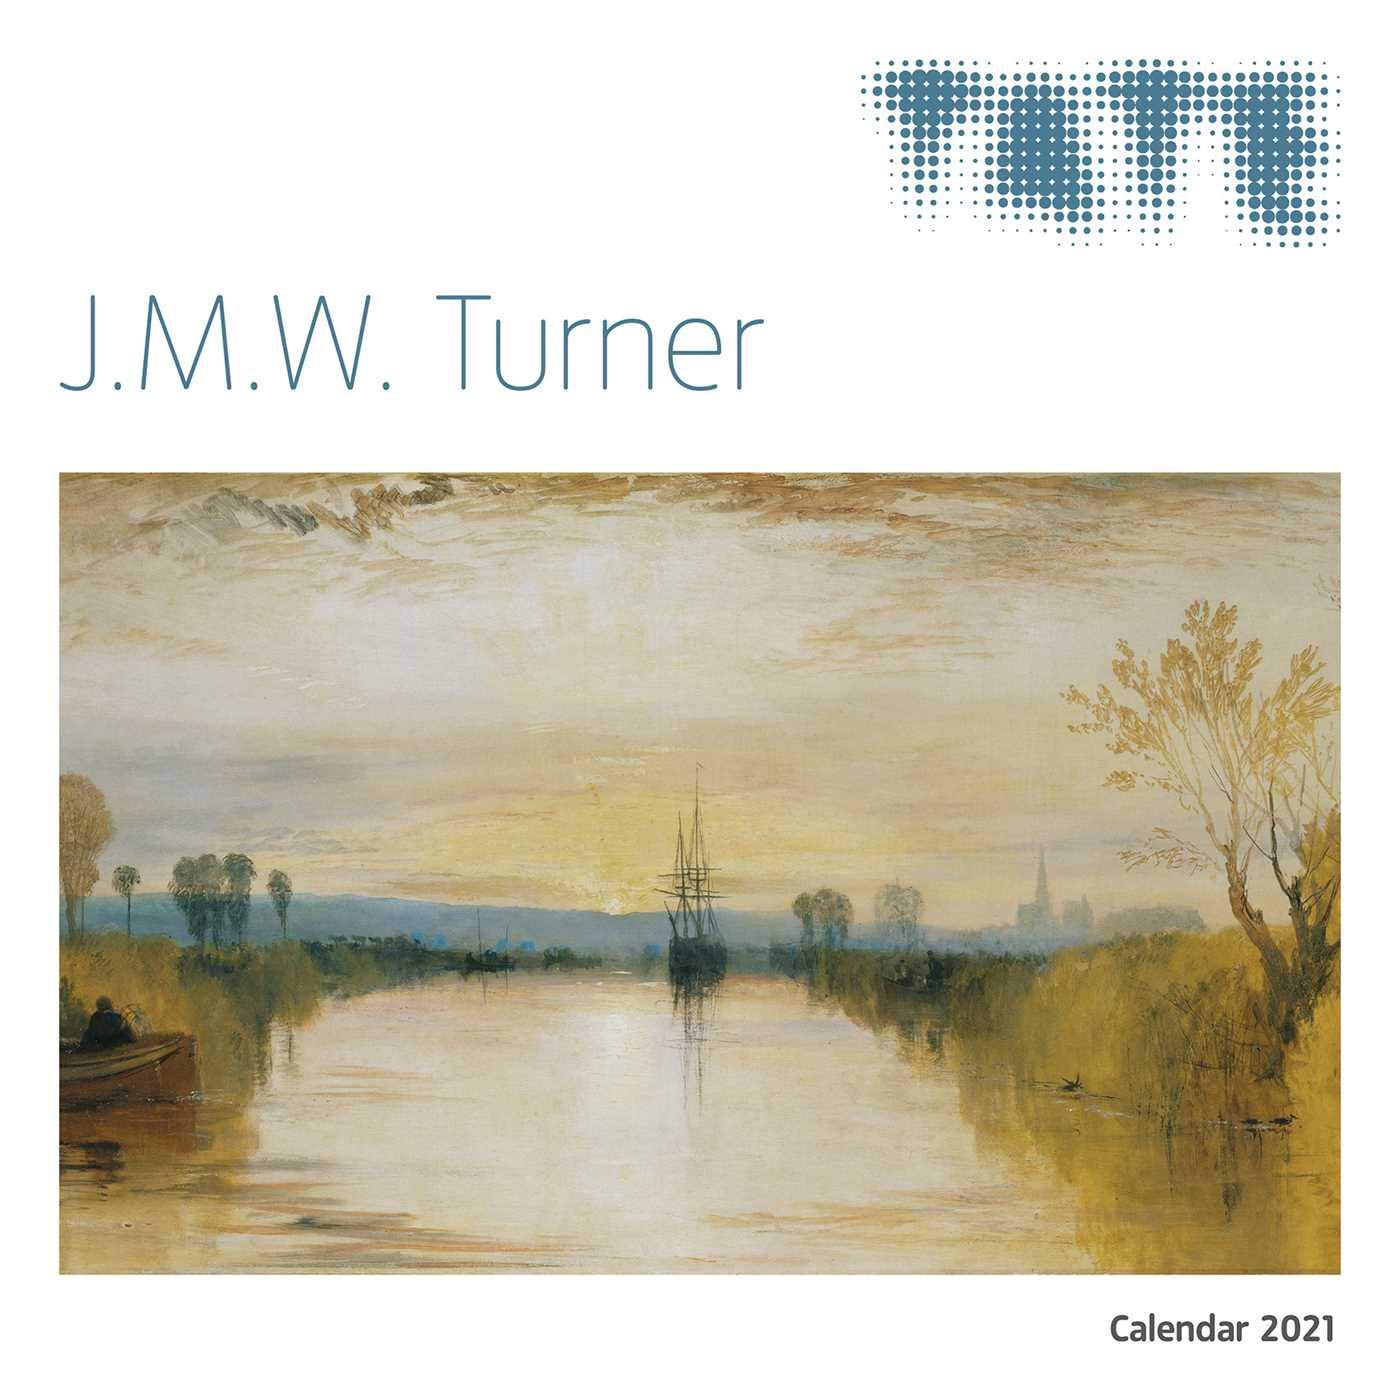 Calendar 2021 - Tate - J.M.W. Turner | Flame Tree Studio